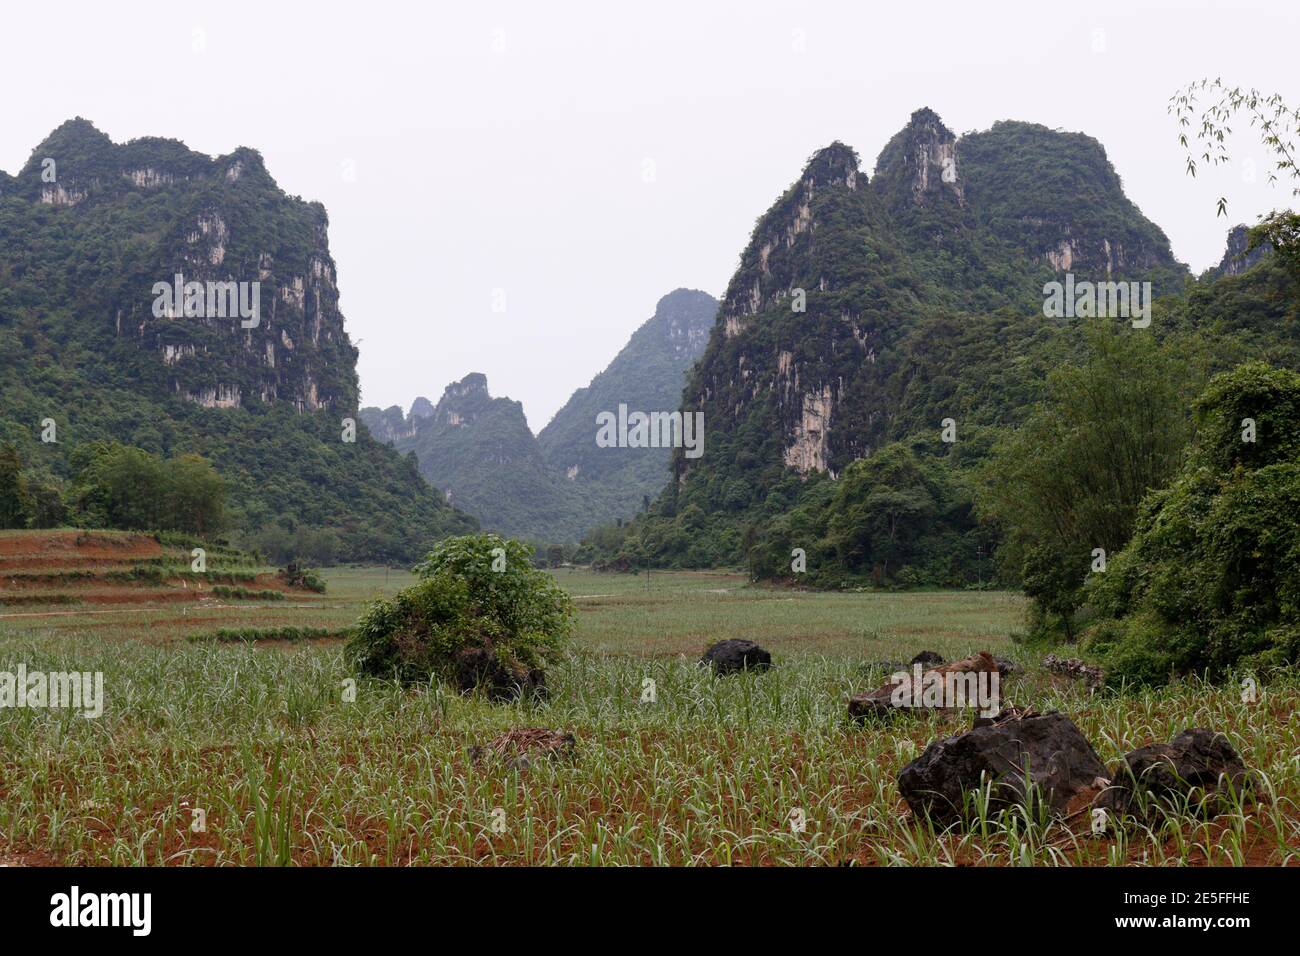 Karst landscape and cornfields, Longchuan County, Guangxi Province, China 22nd April 2016 Stock Photo